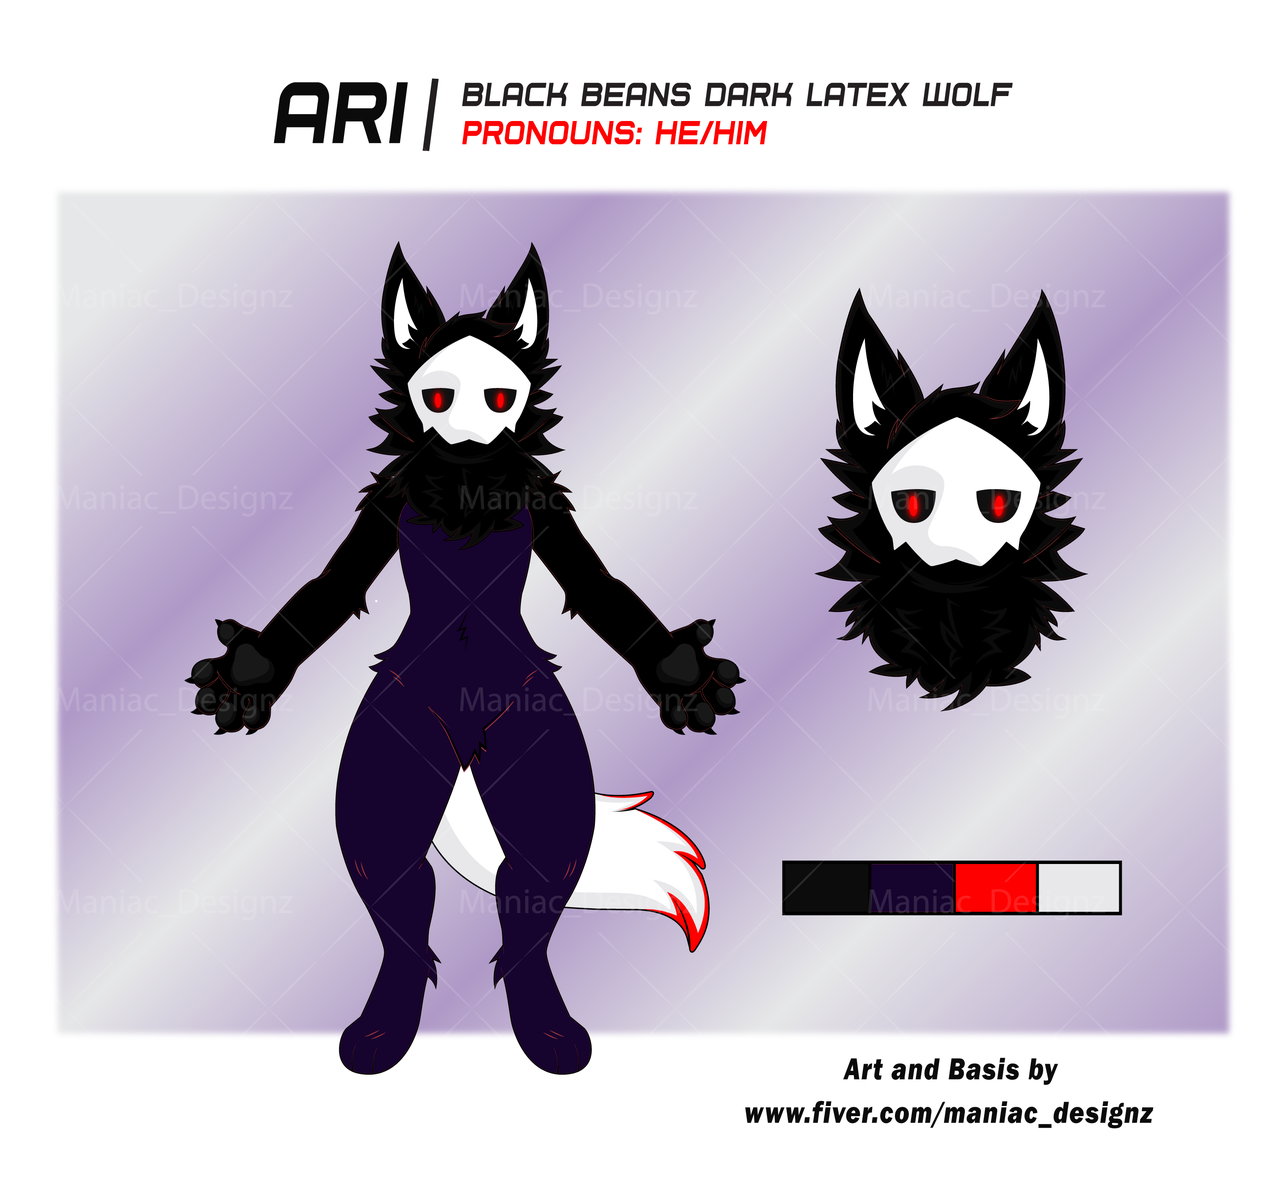 ARI a dark latex wolf